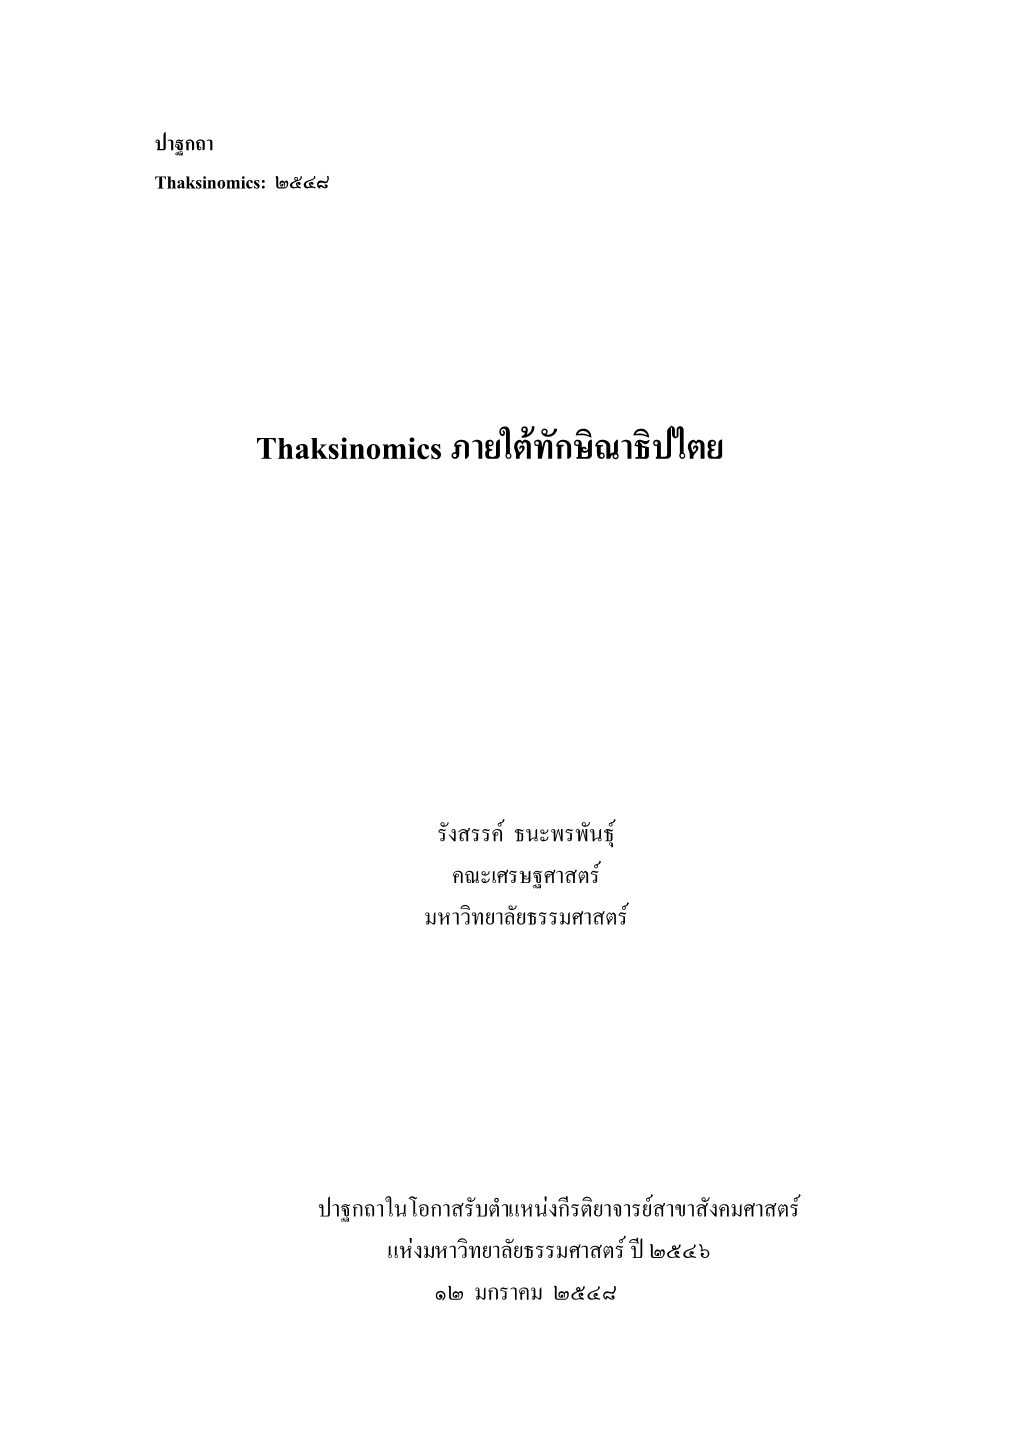 Thaksinomics ภายใต้ทักษิณาธิปไตย- Full Version